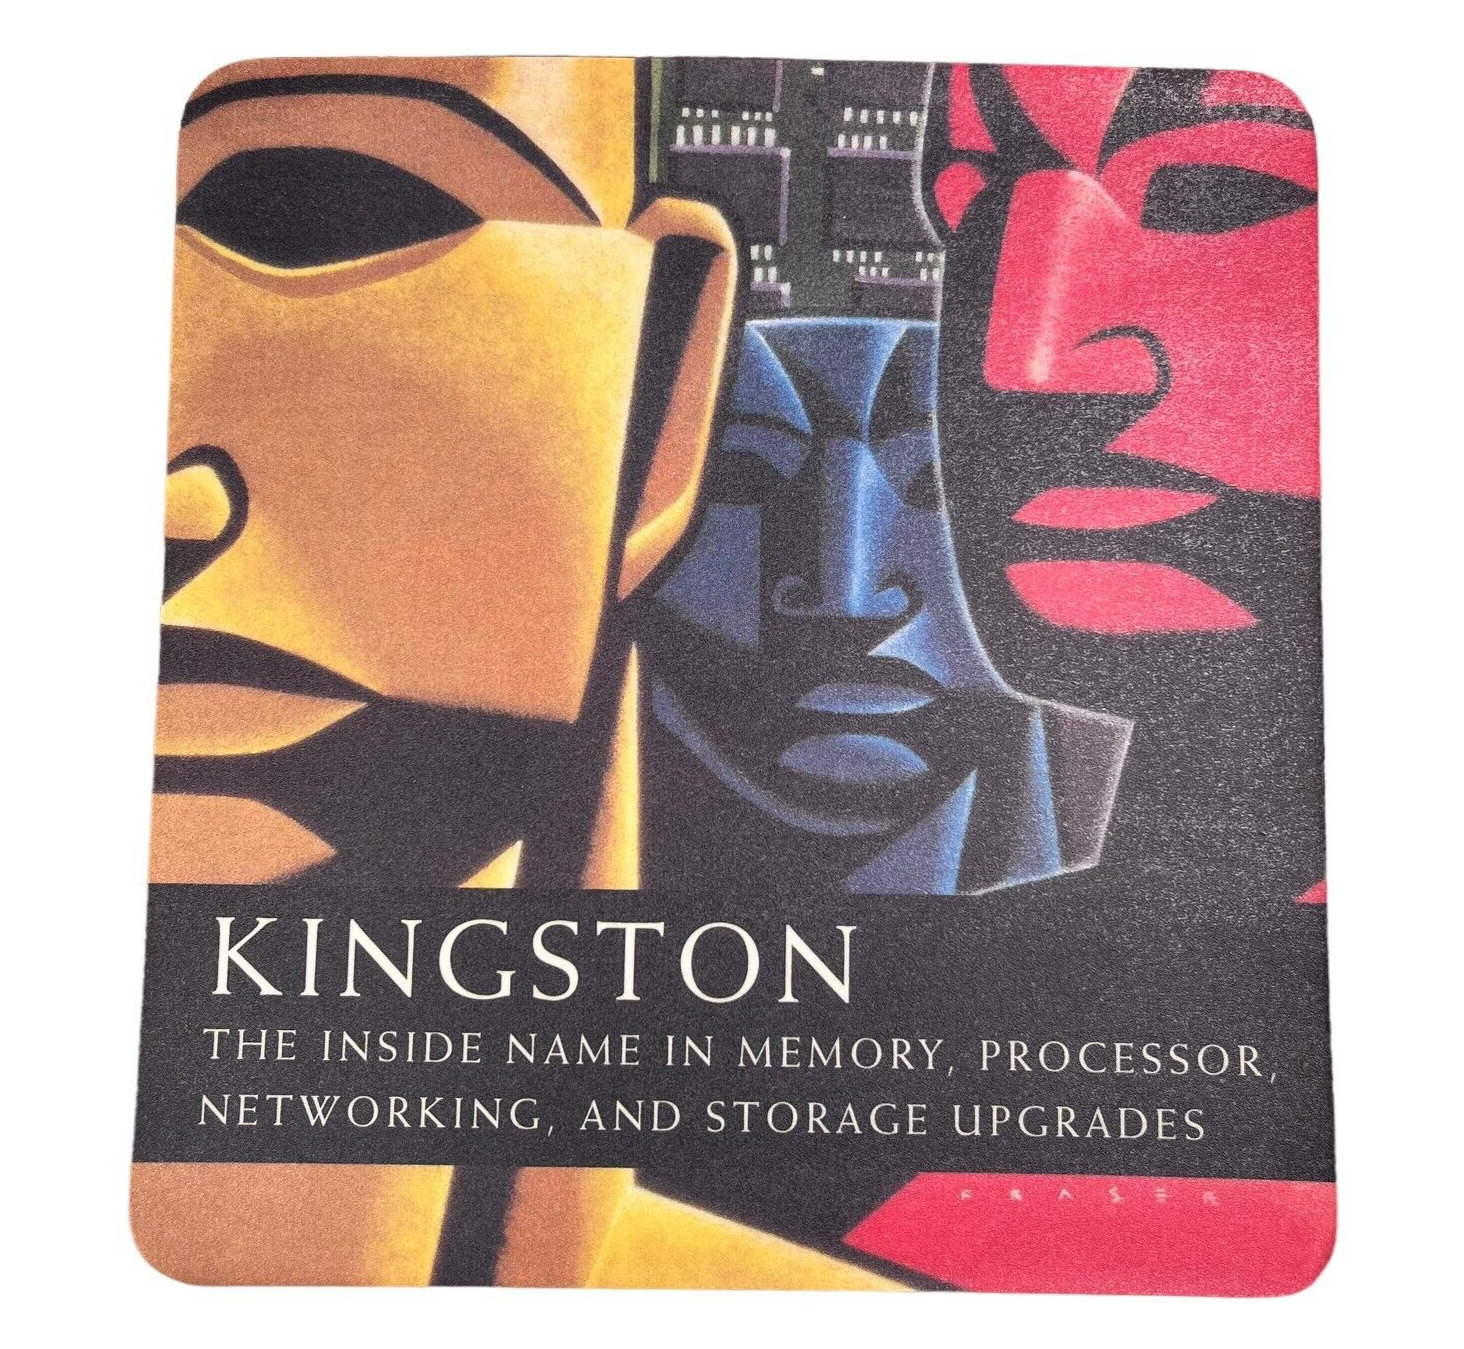 Vintage Computing KINGSTON Mousepad 90s NOS Early Rare